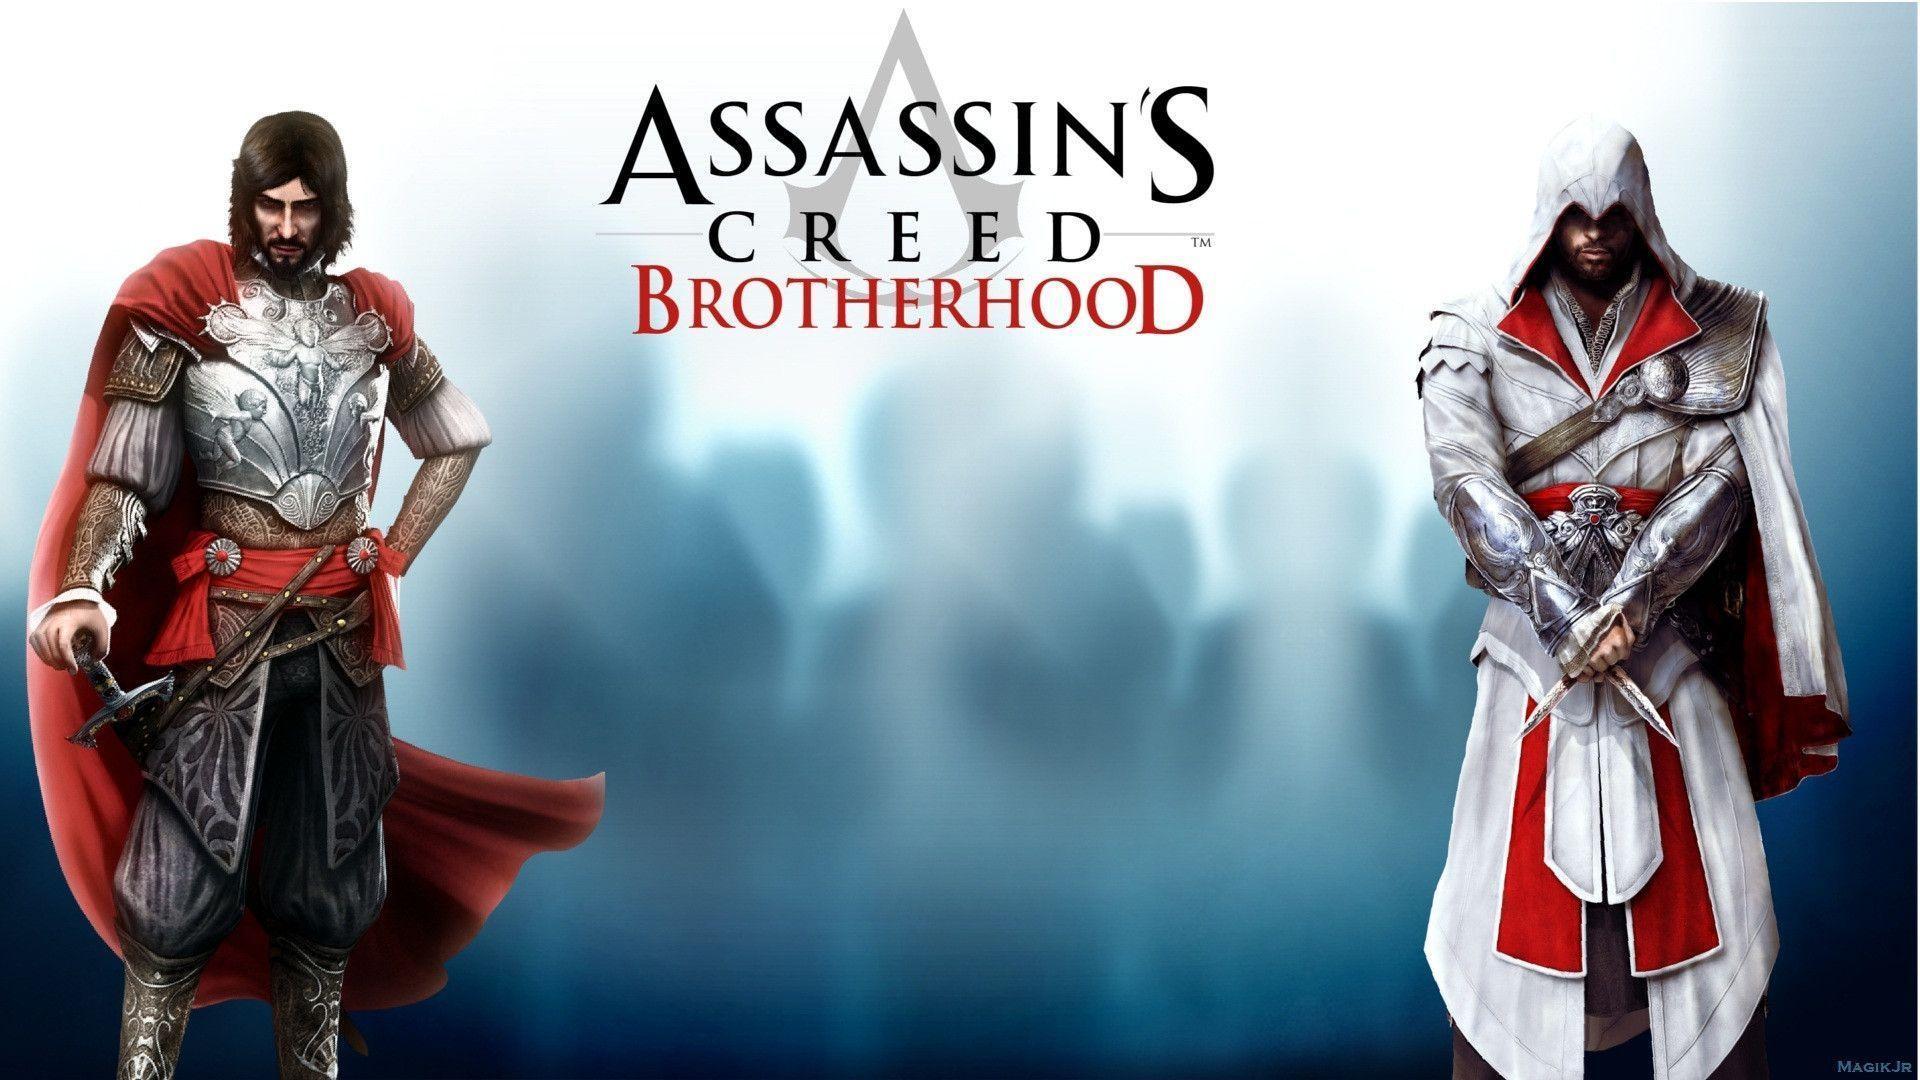 Assassins Creed Brotherhood Wallpaper in HD